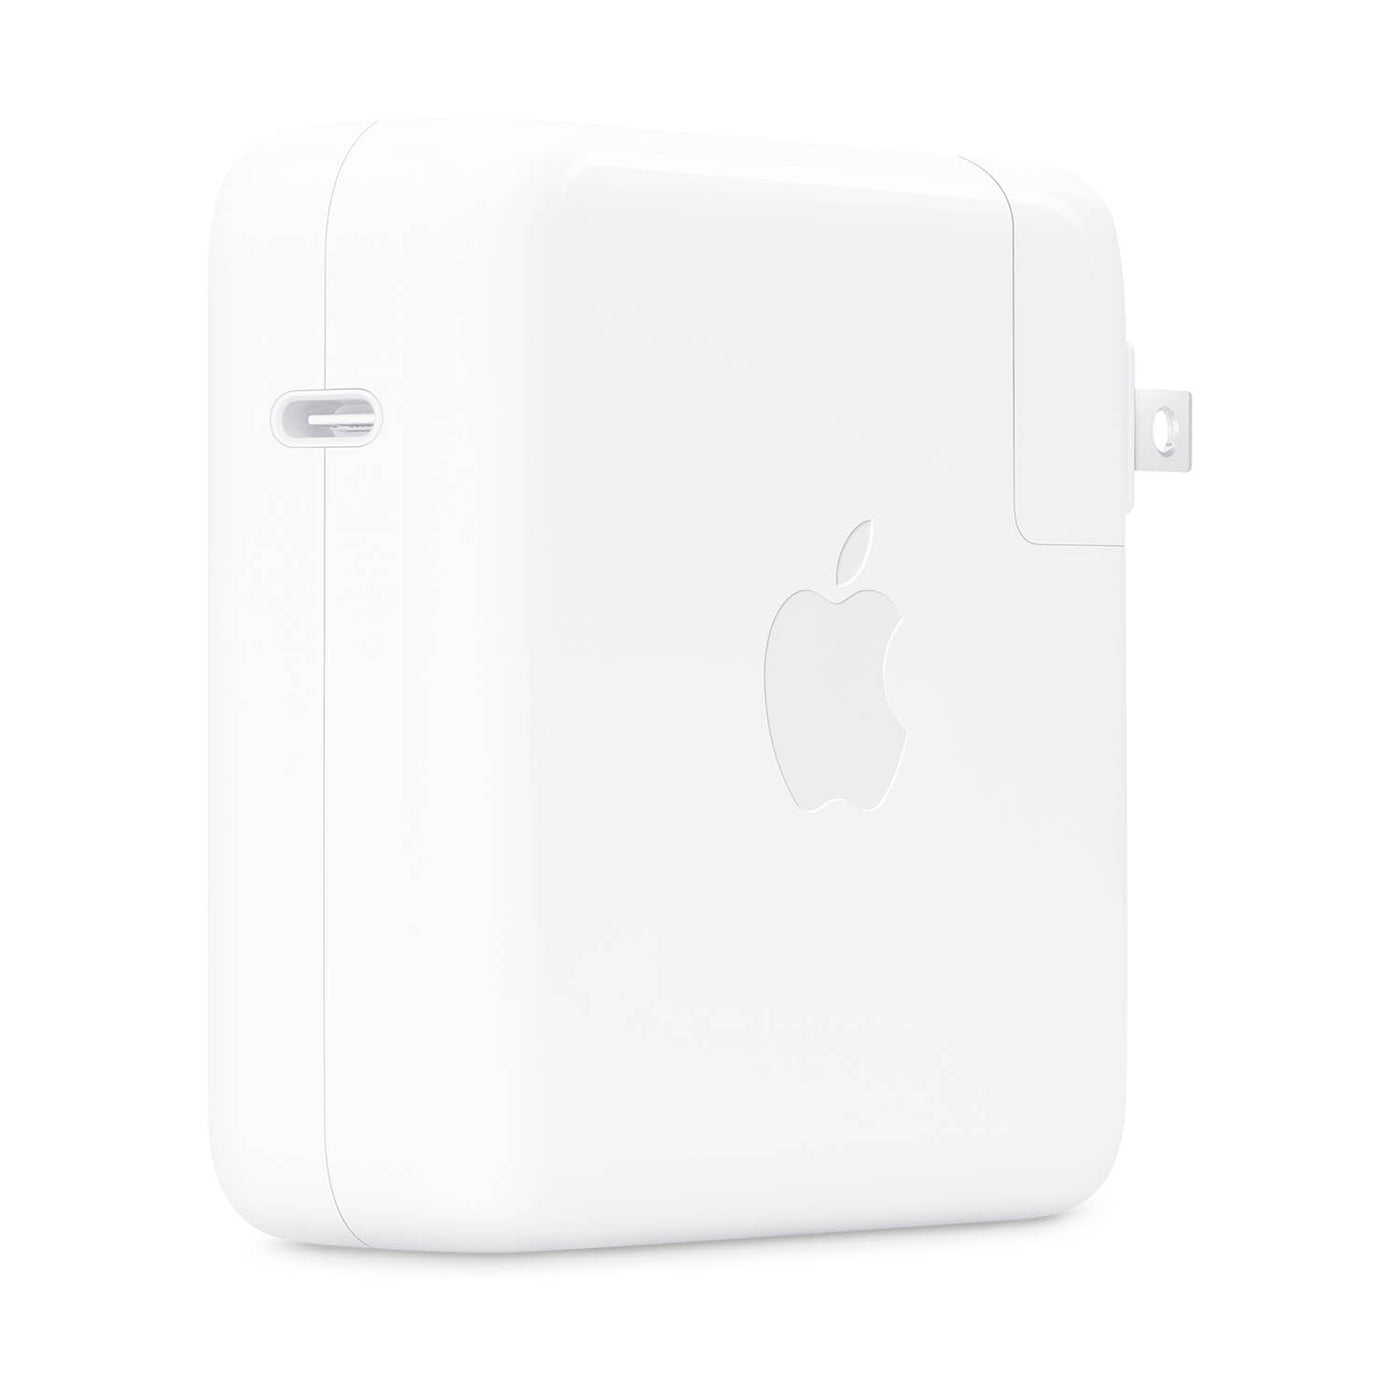 Apple 96W USB-C Power Adapter – The Bowdoin Store